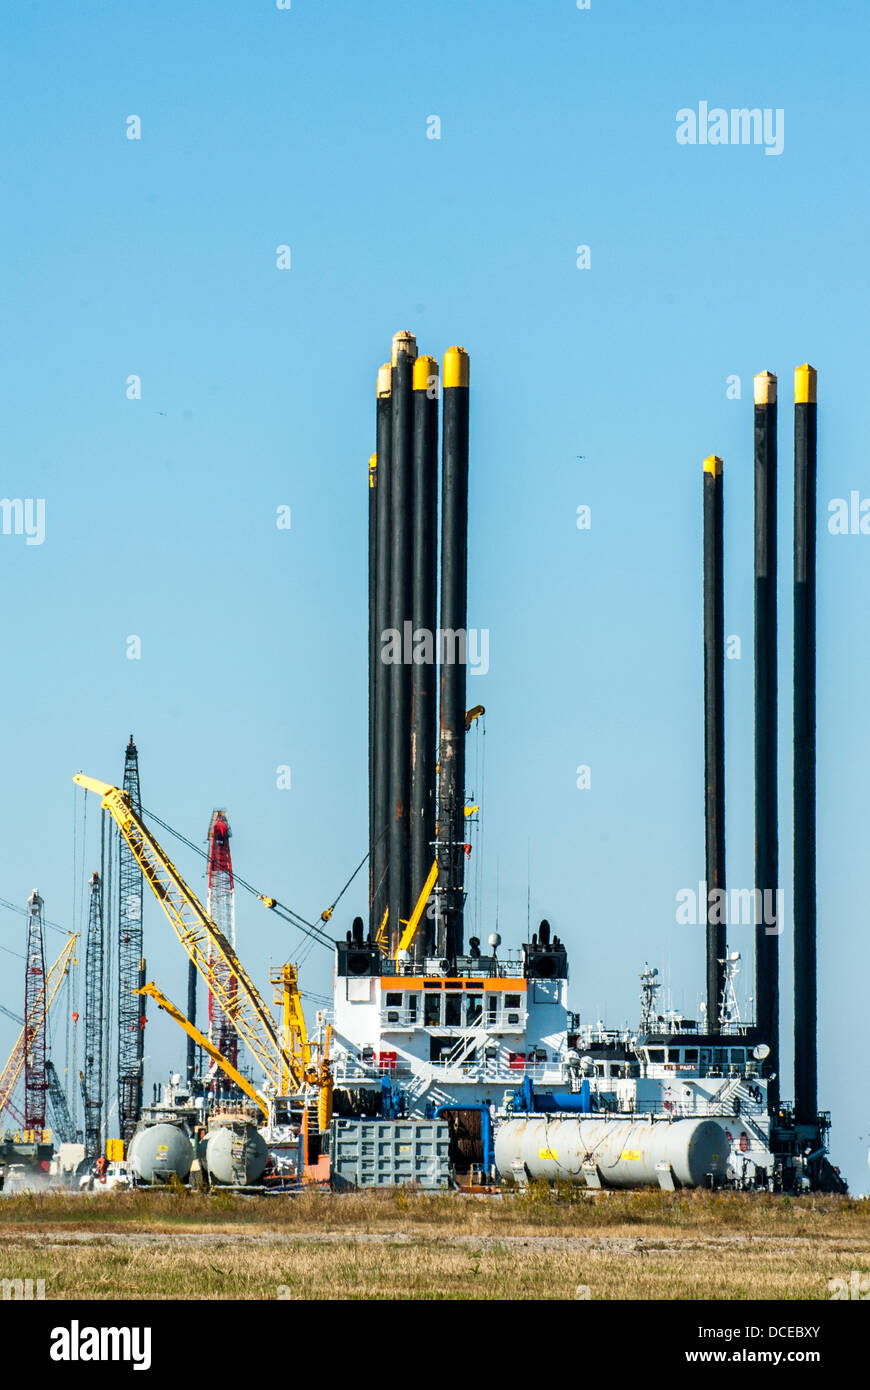 USA, Louisiana, Atchafalaya Basin, drilling platform equipment and cranes in Port Fourchon. Stock Photo